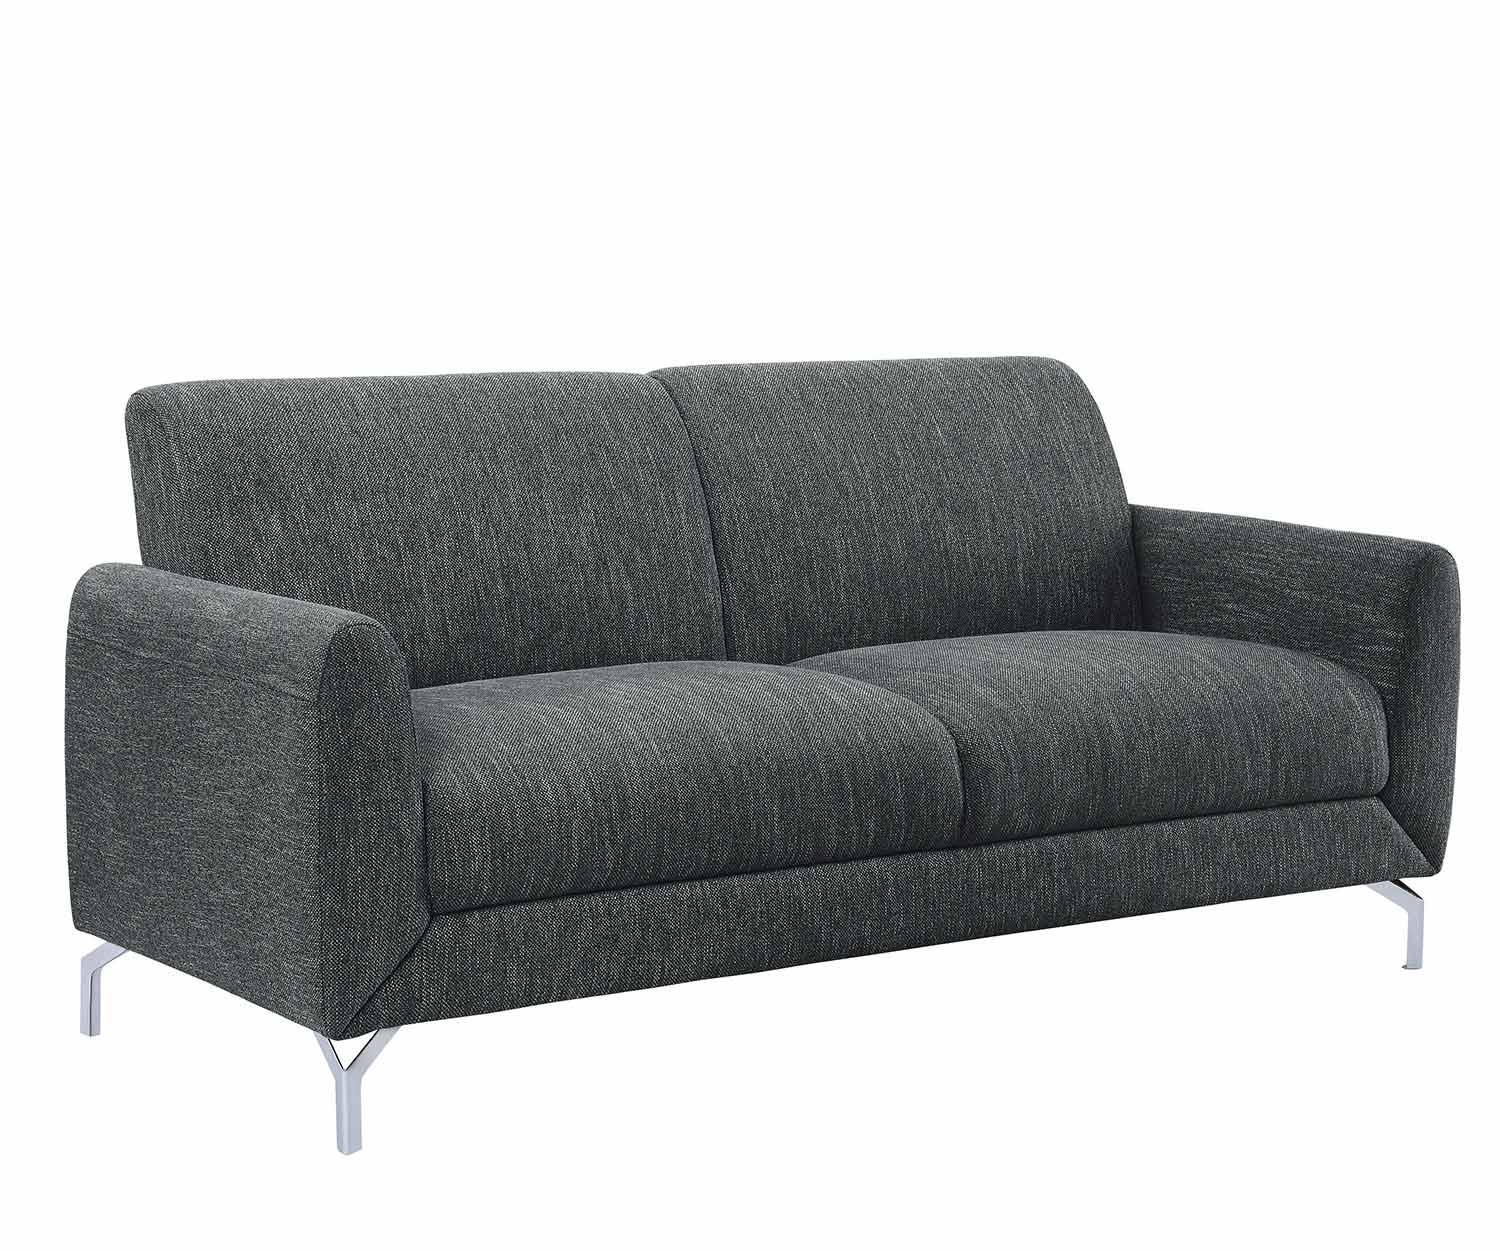 Homelegance Venture Sofa - Dark gray